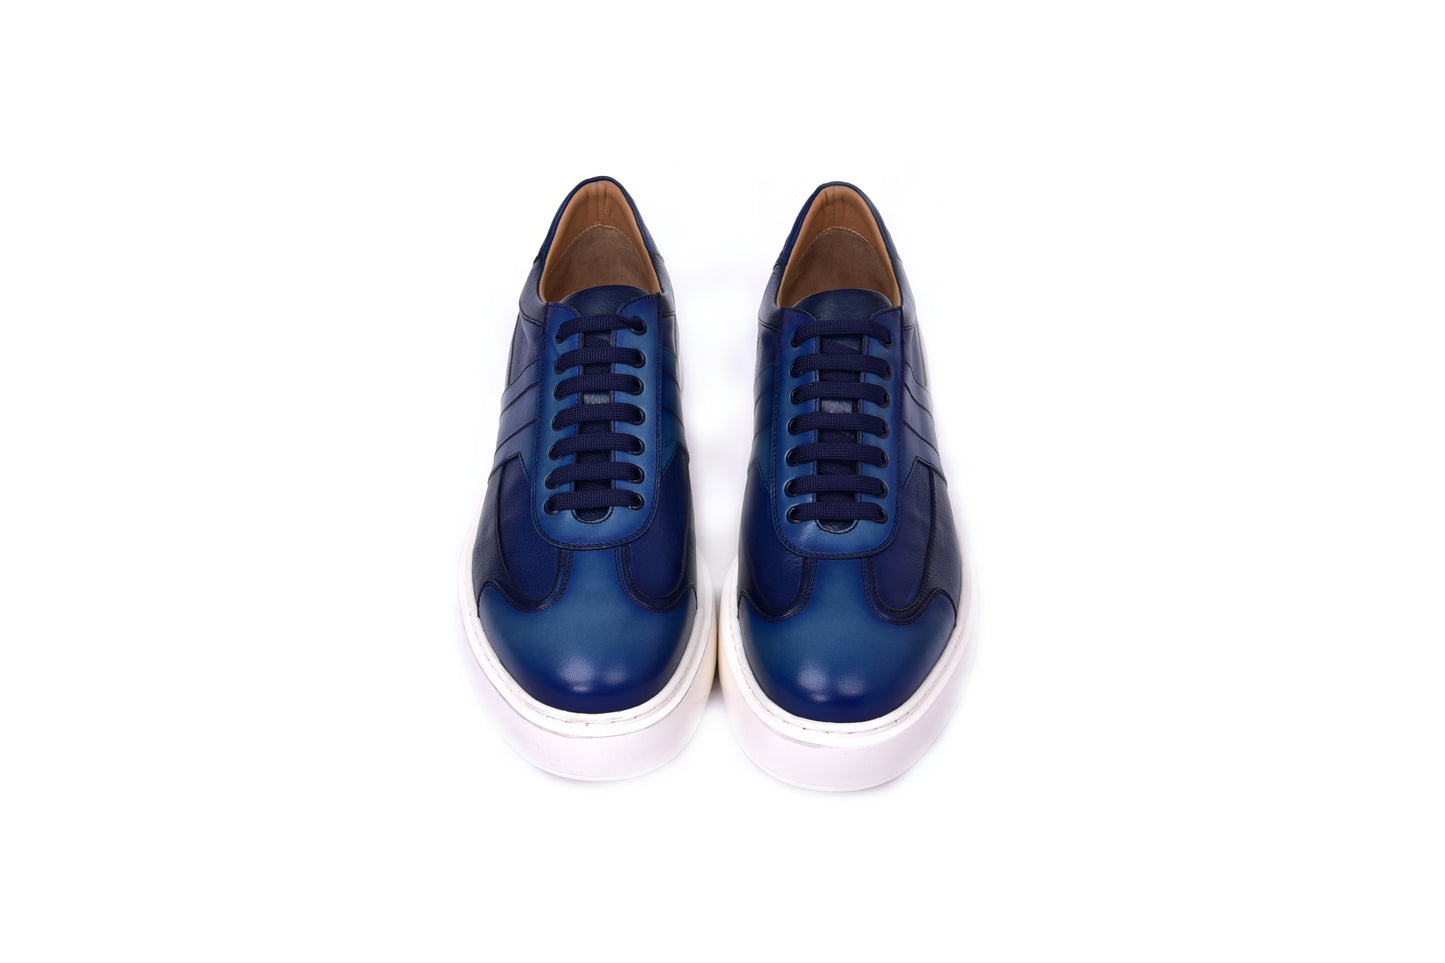 C0013011-5769 Fashion Sneaker- Navy